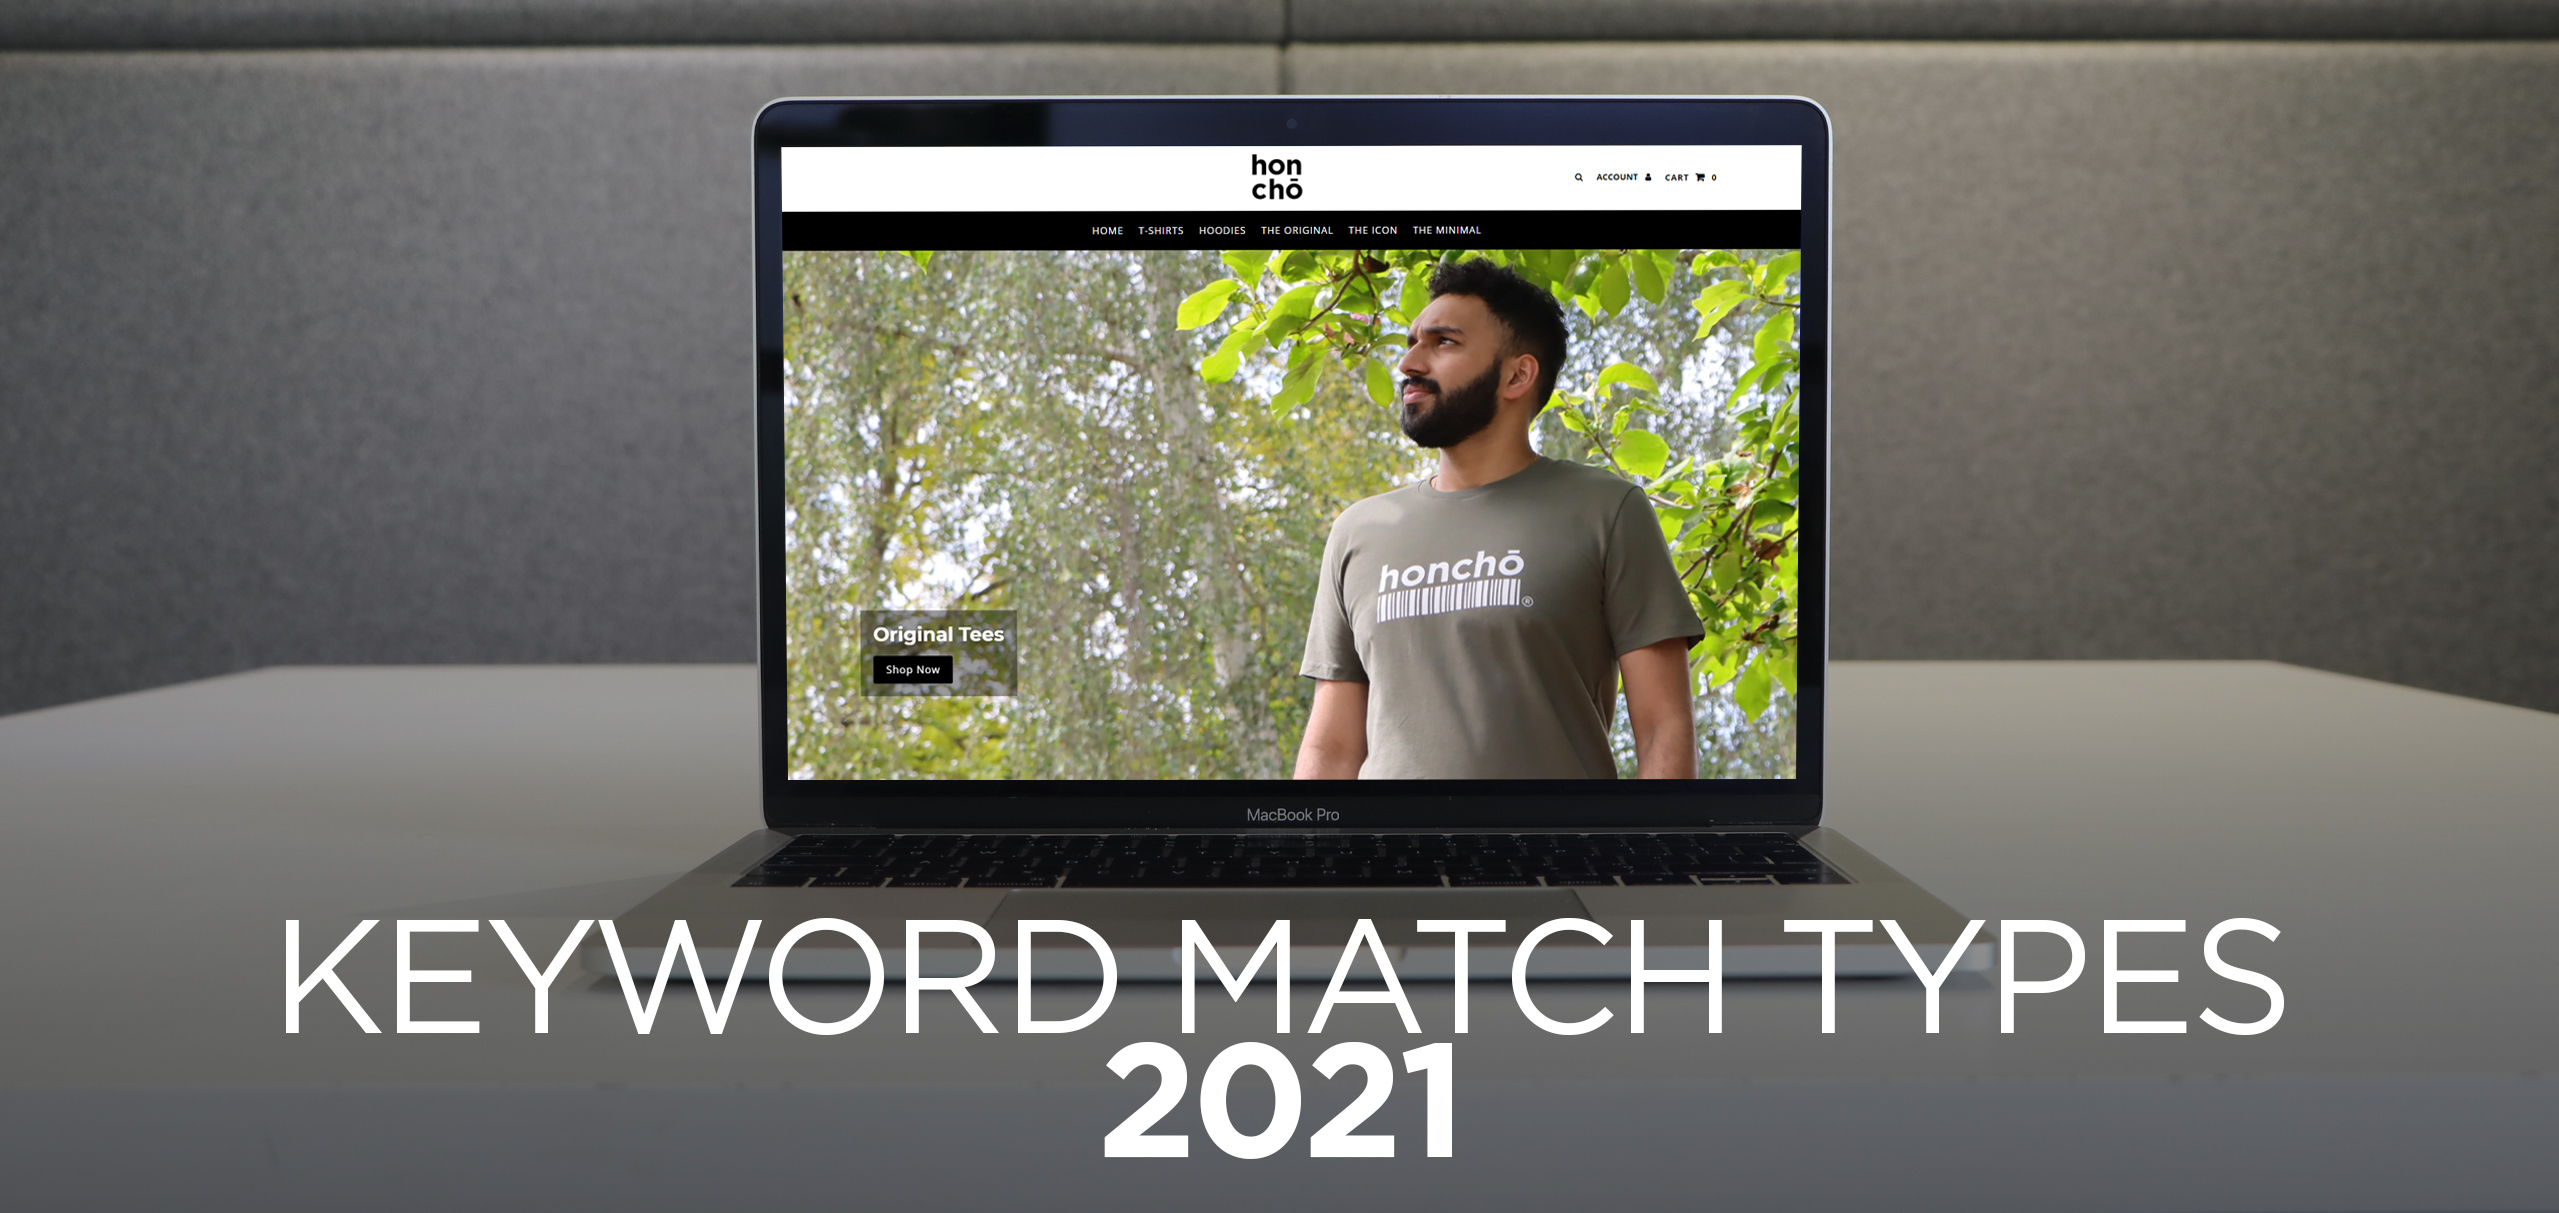 Keyword match types in 2021